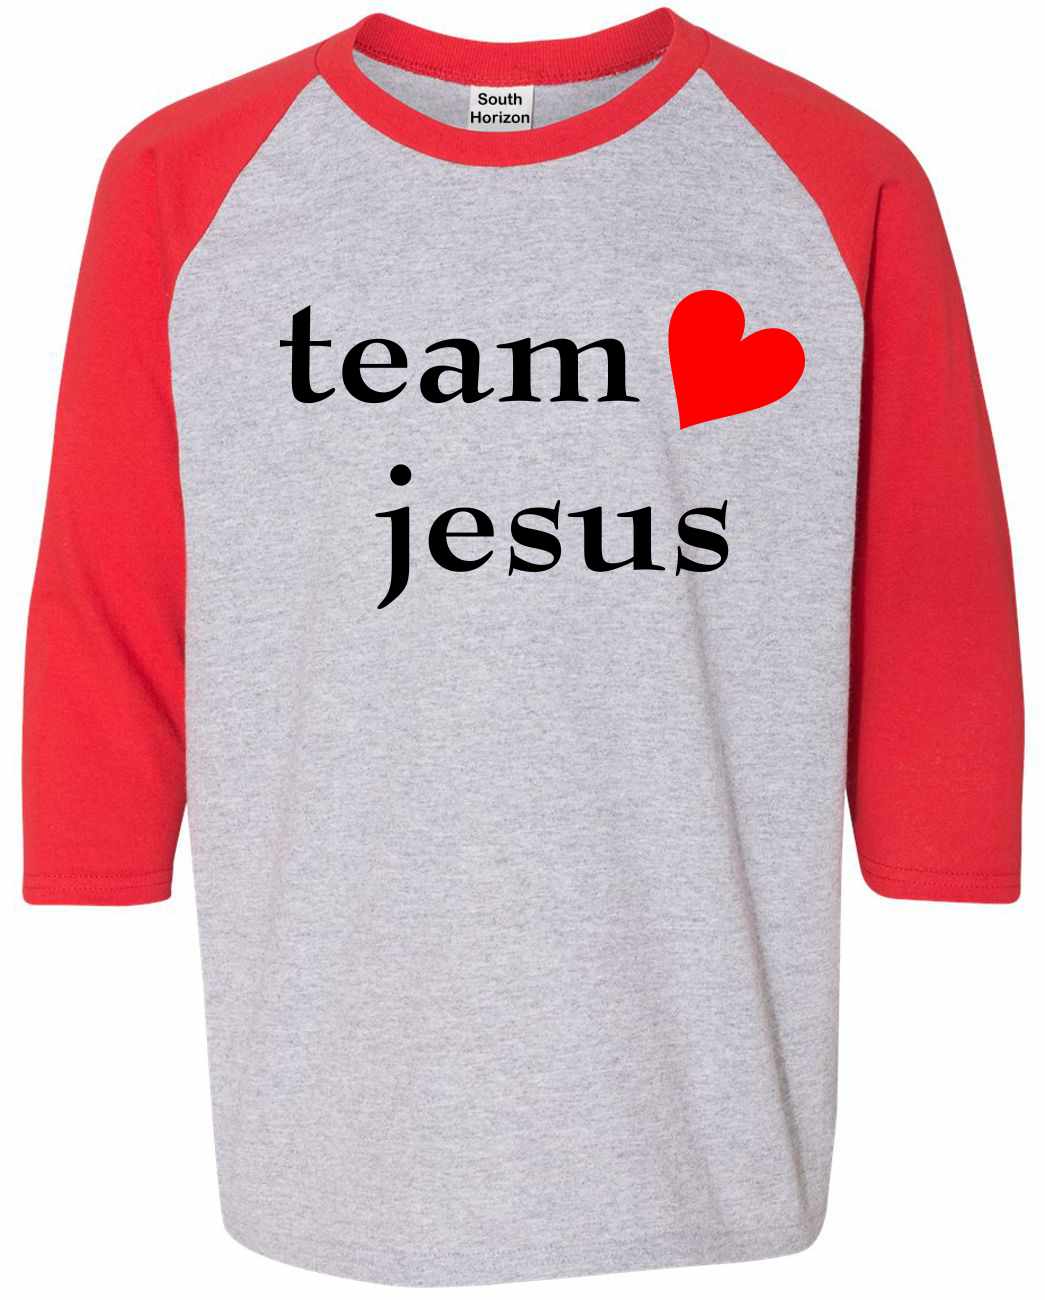 Team Jesus (heart) on Youth Baseball Shirt